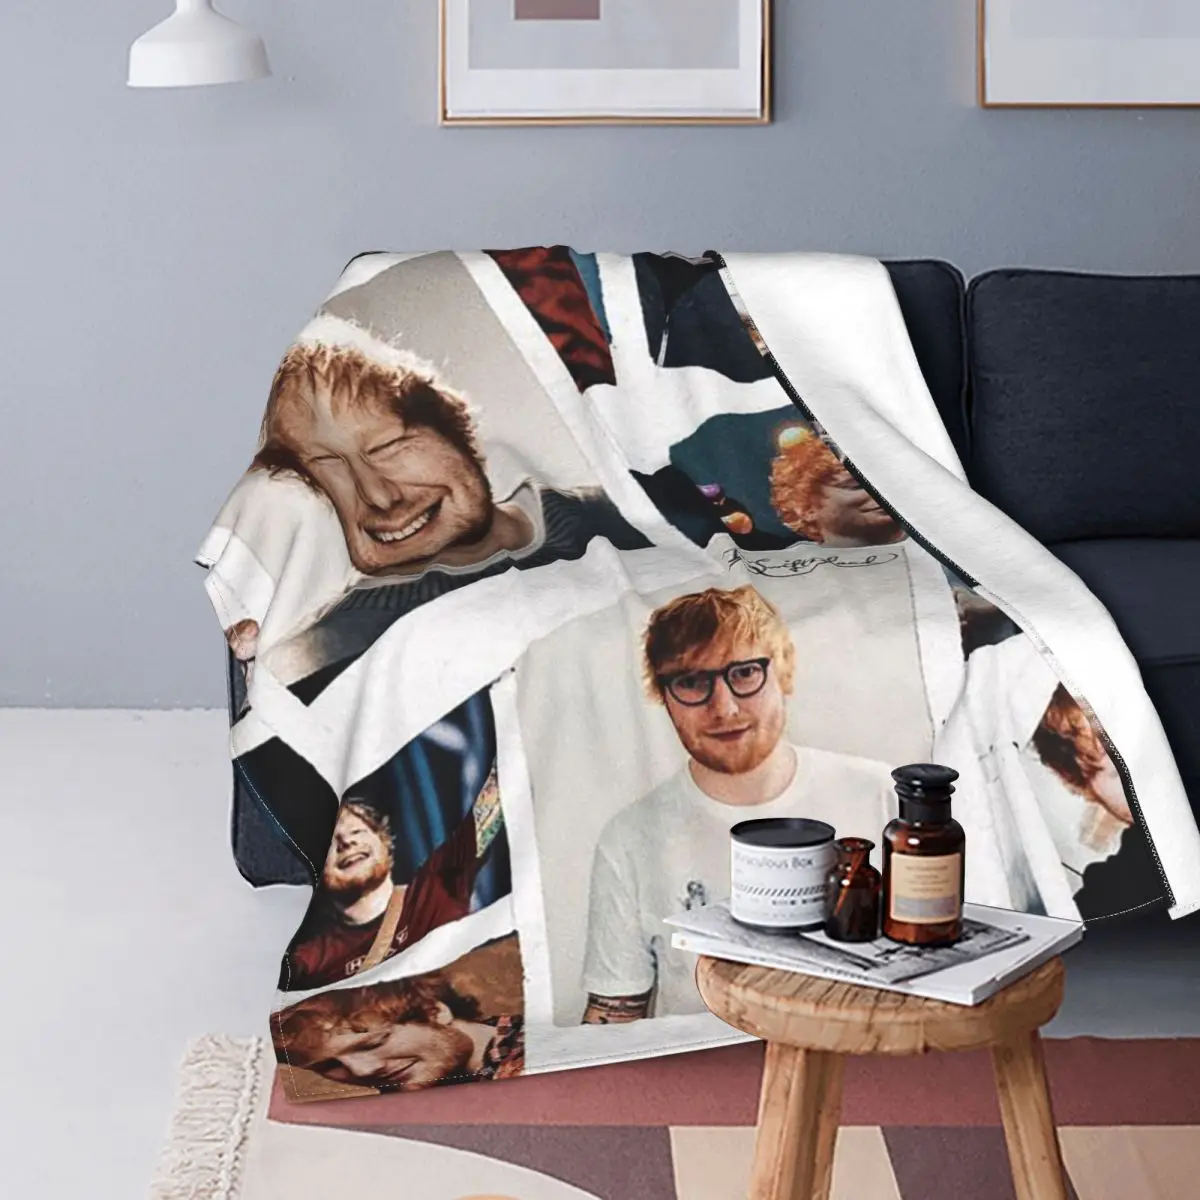 

Ed Sheeran Singer Blankets Flannel All Season Multifunction Lightweight Throw Blanket for Home Office Rug Piece